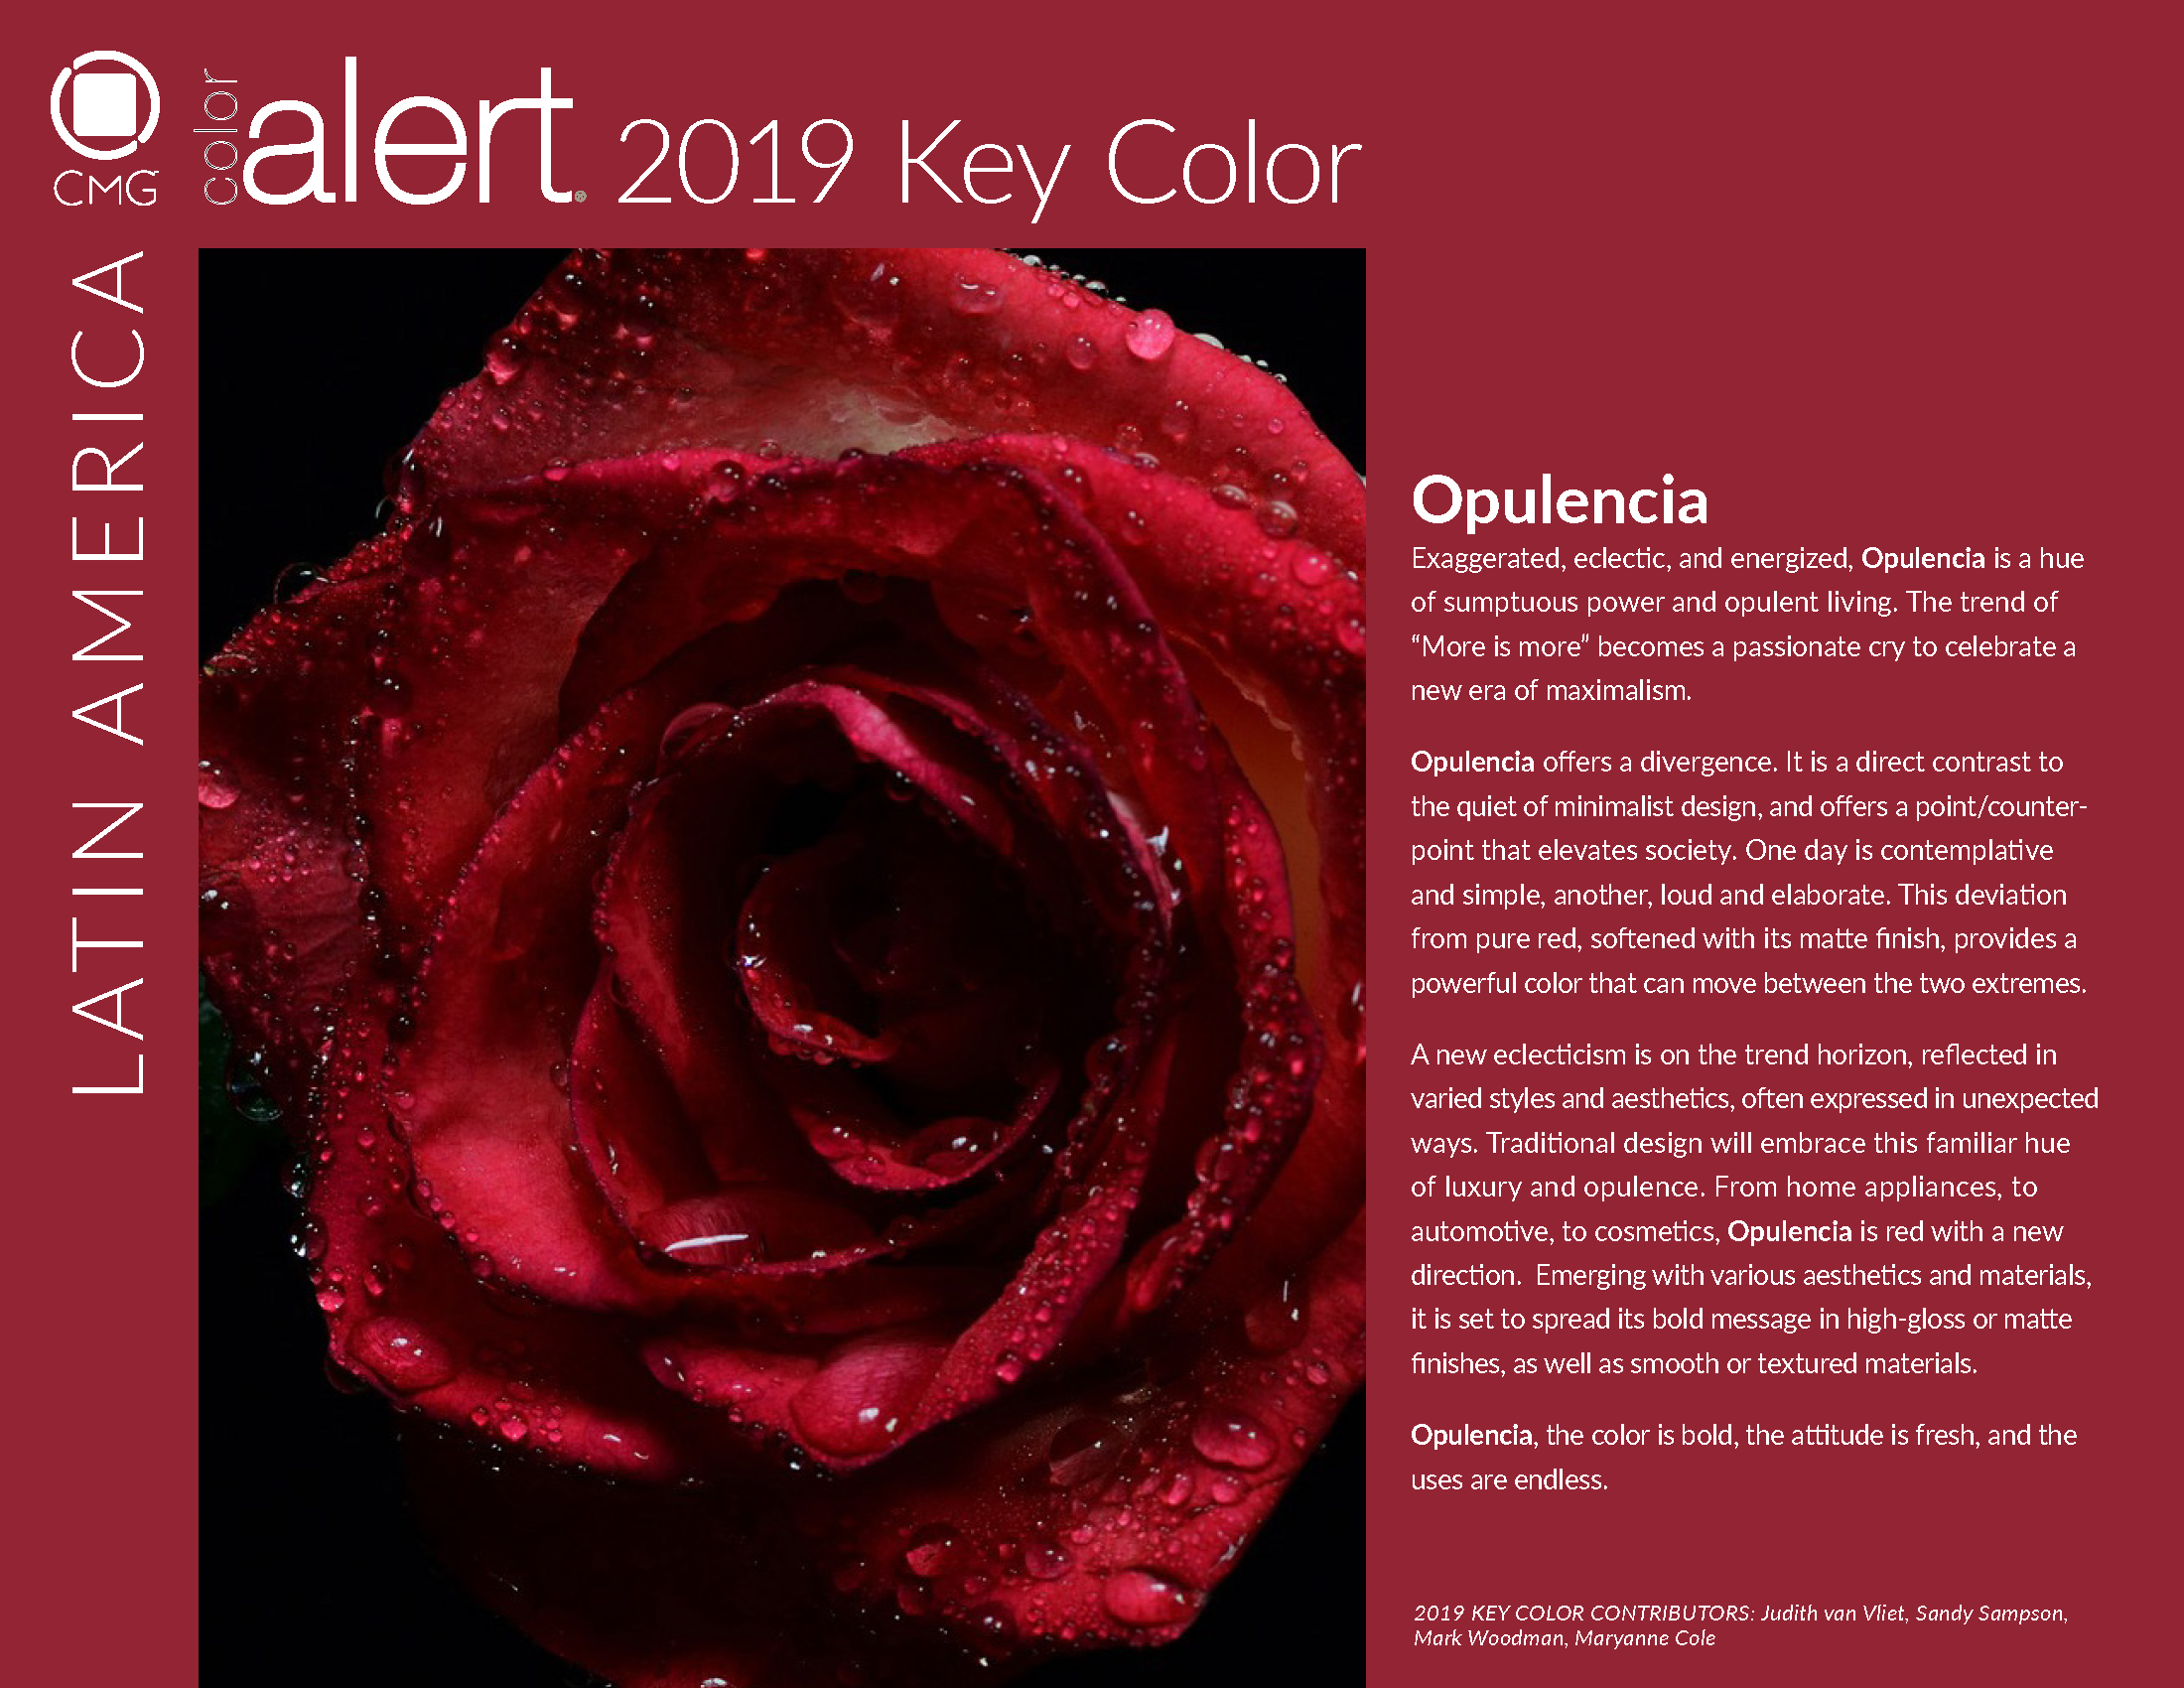 CMG 2019 Key Color Opulencia